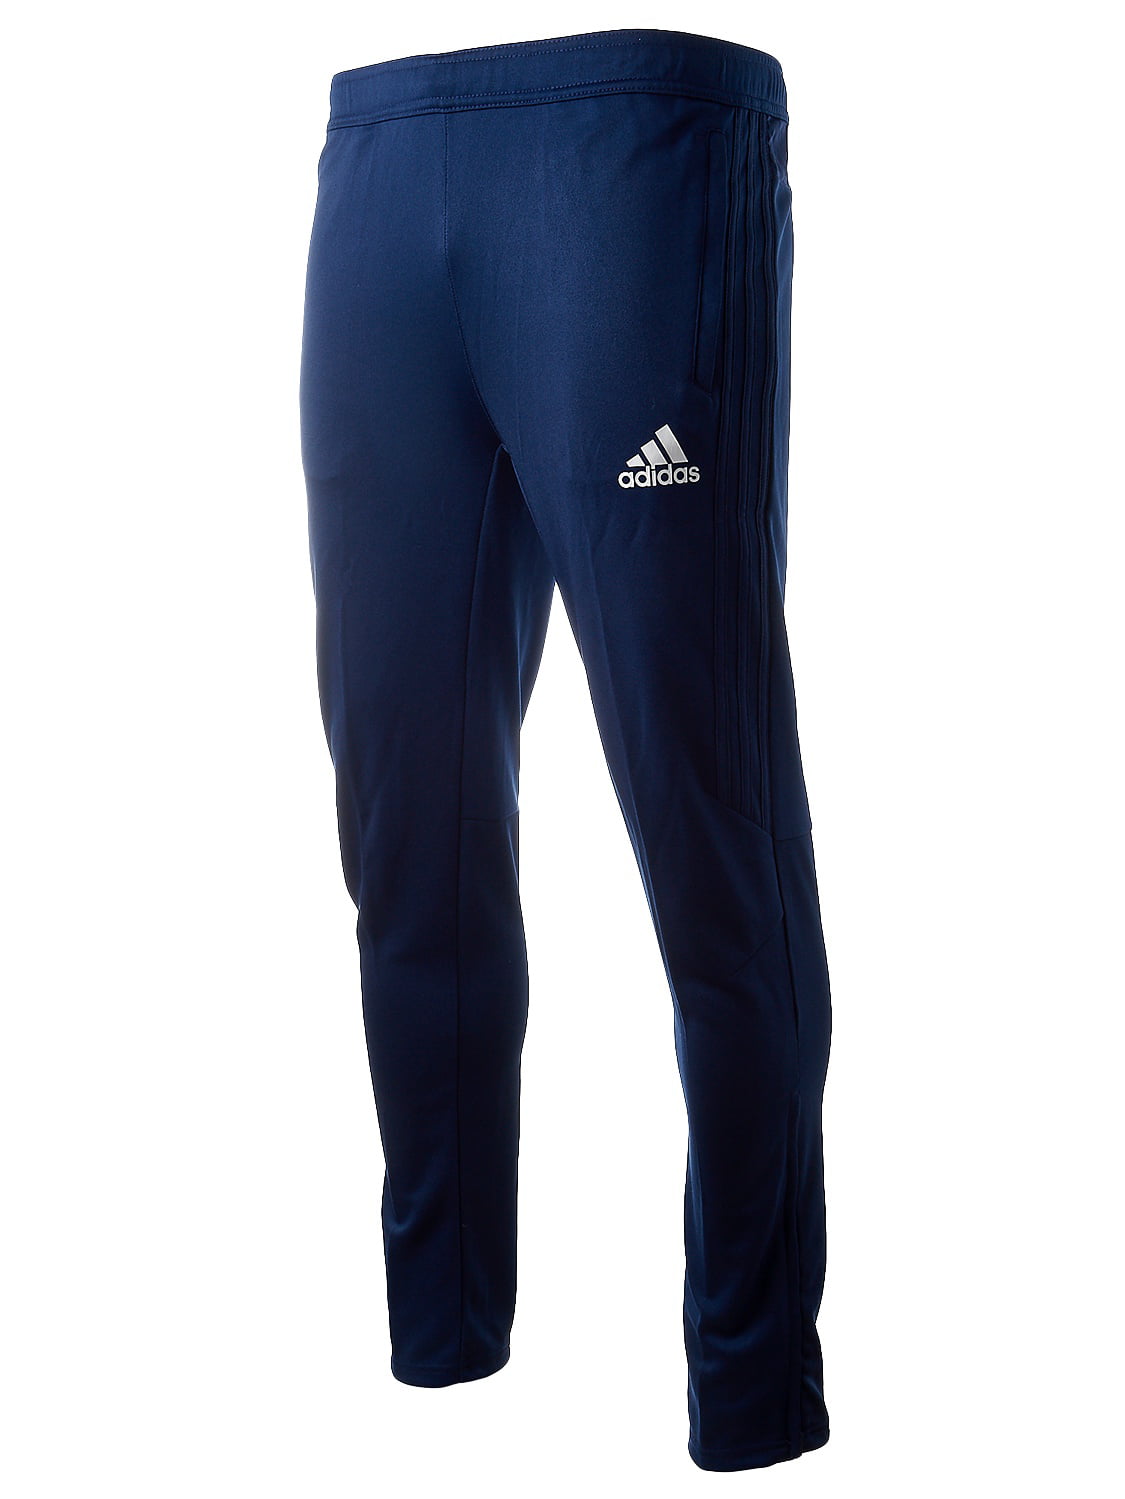 Adidas TIRO17 Track Pants  Youth  Juggles Football Culture